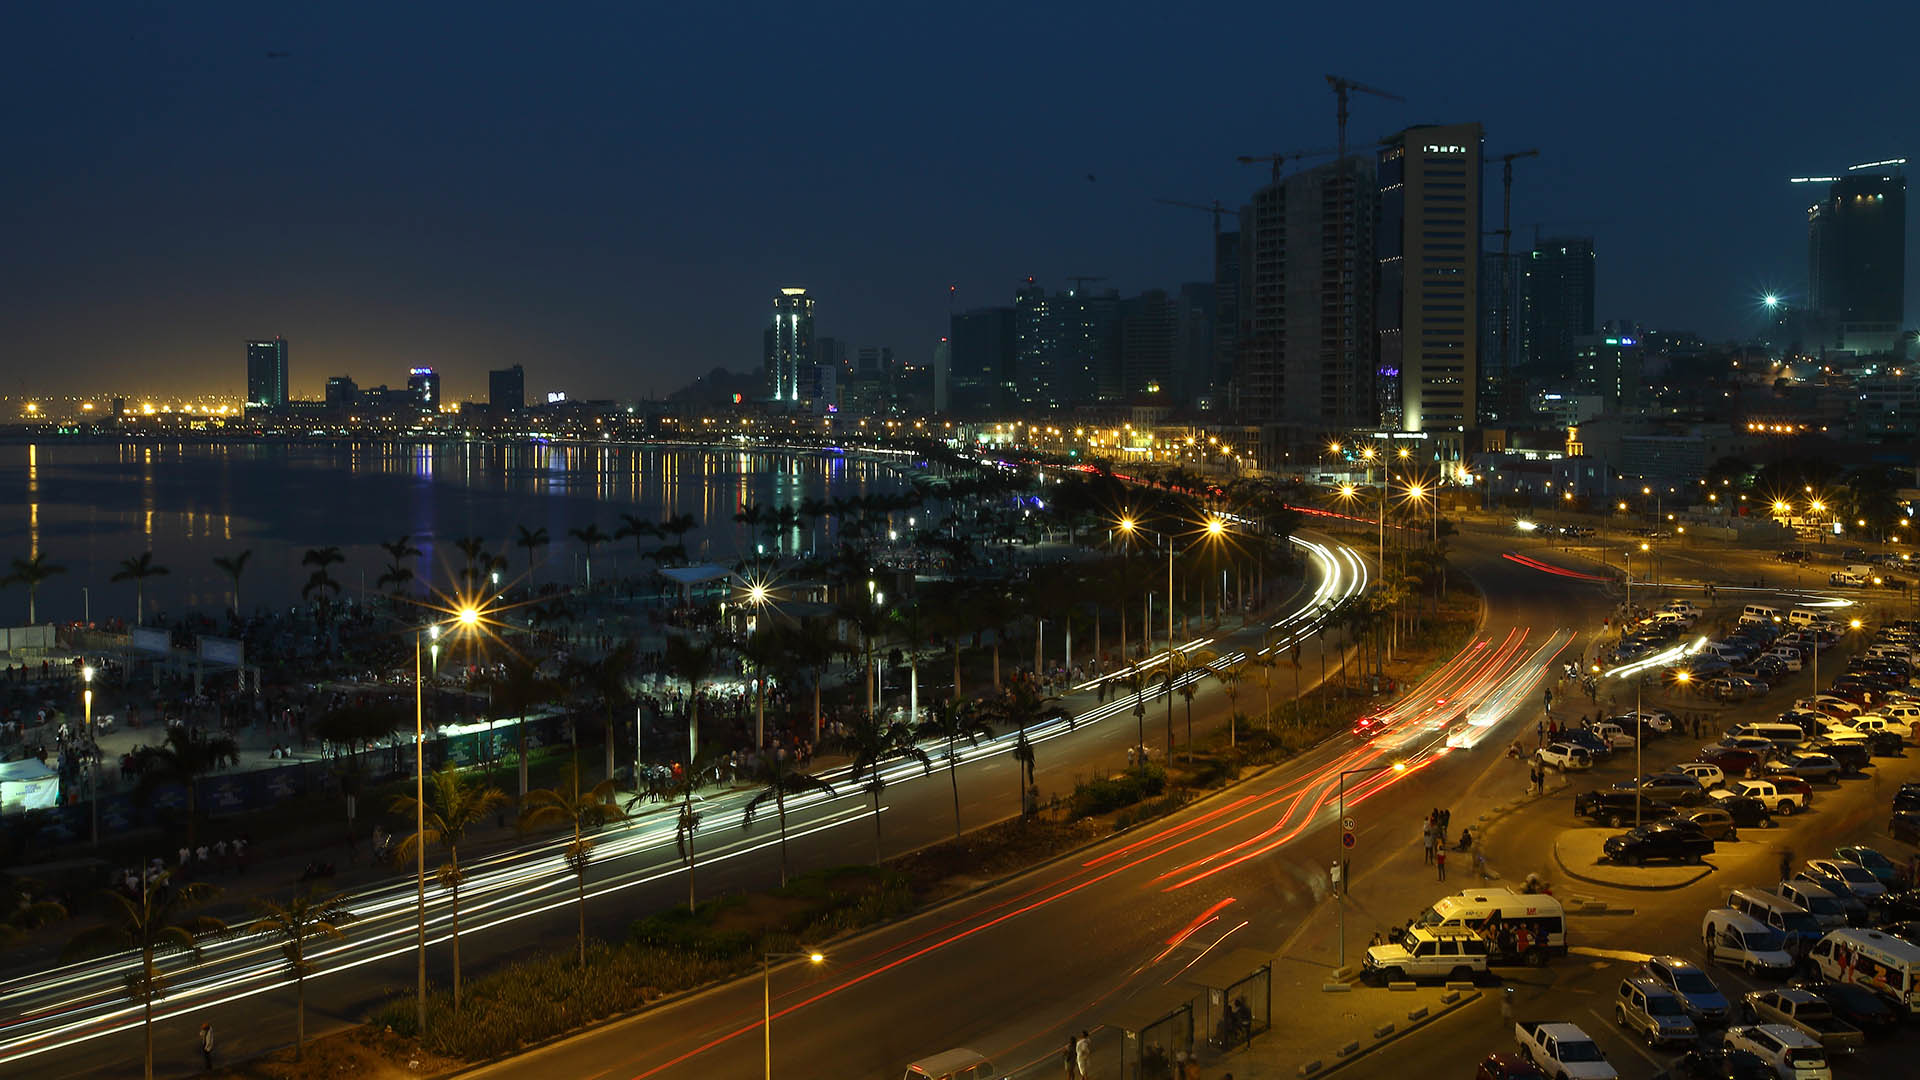 Angola's capital city, Luanda